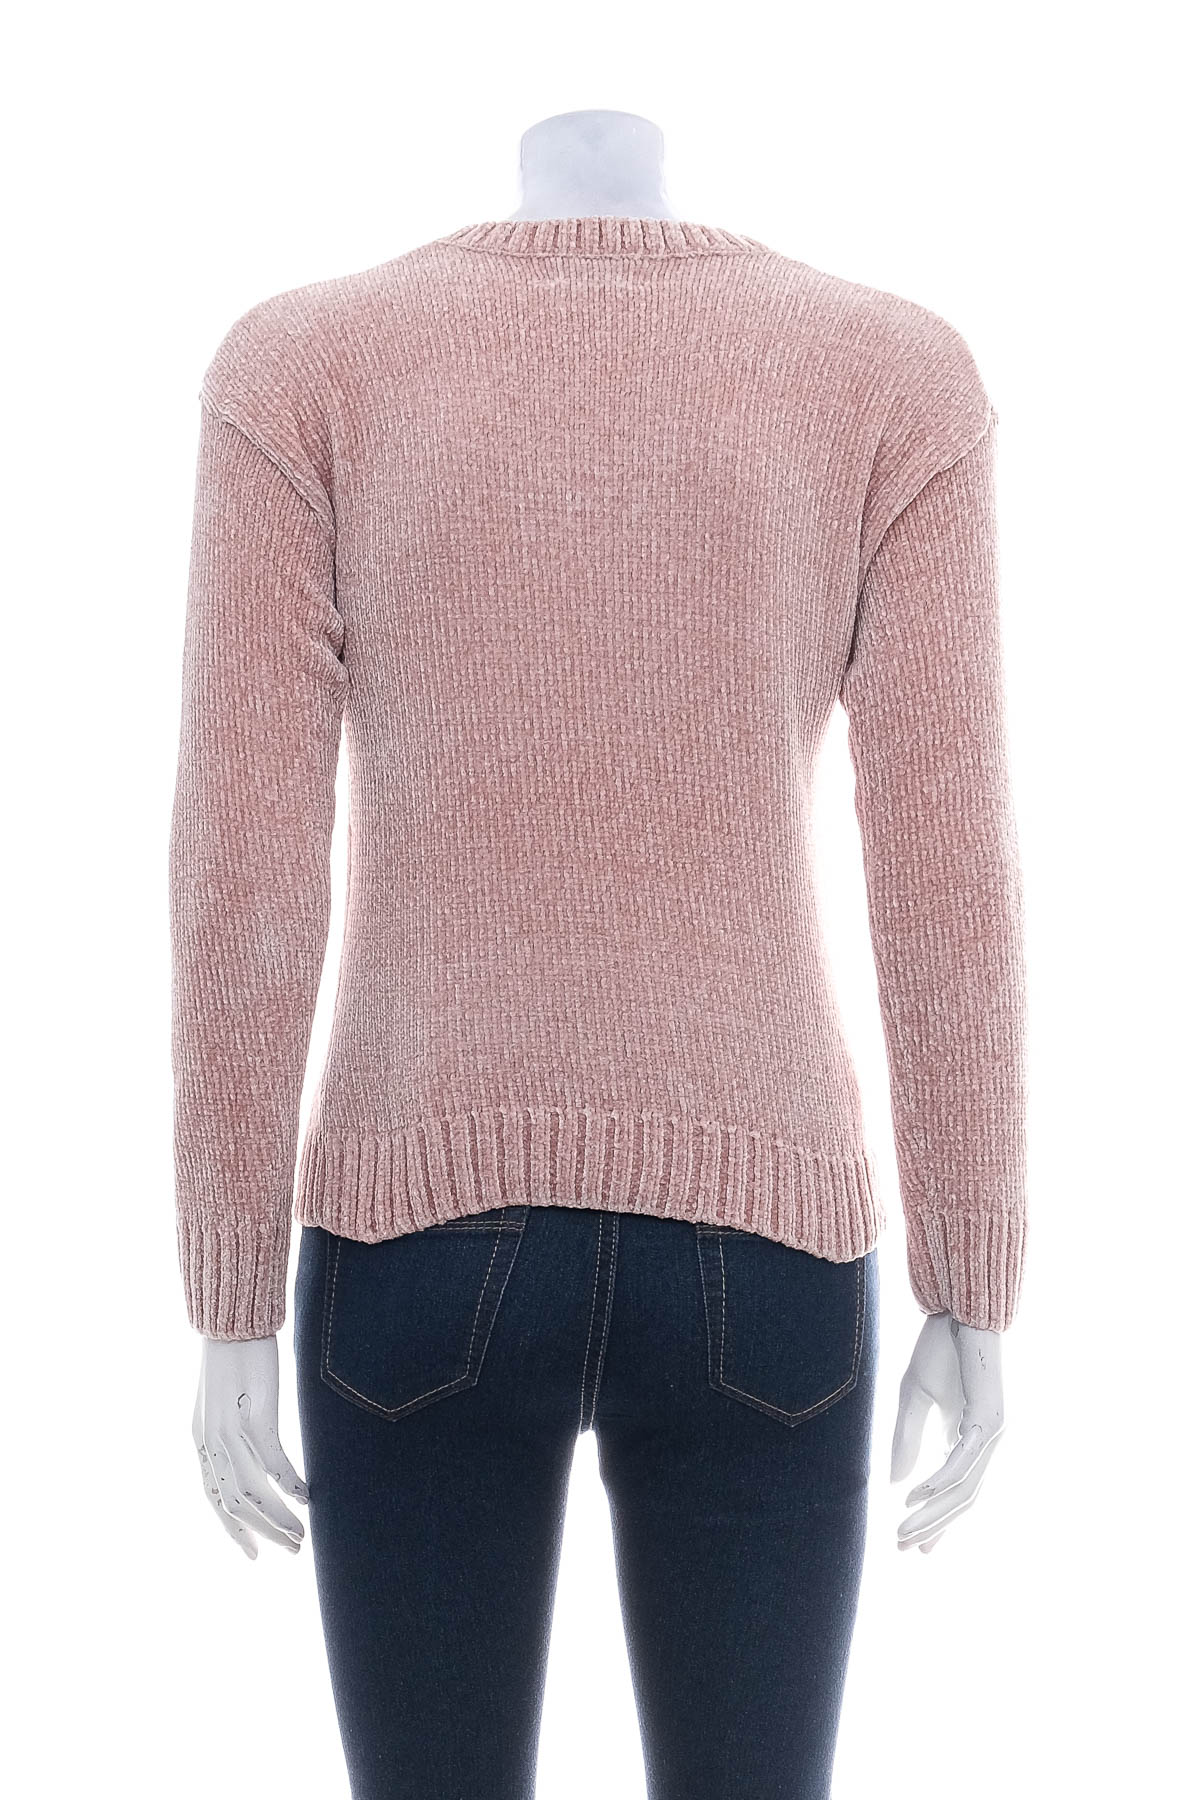 Women's sweater - CROPP - 1